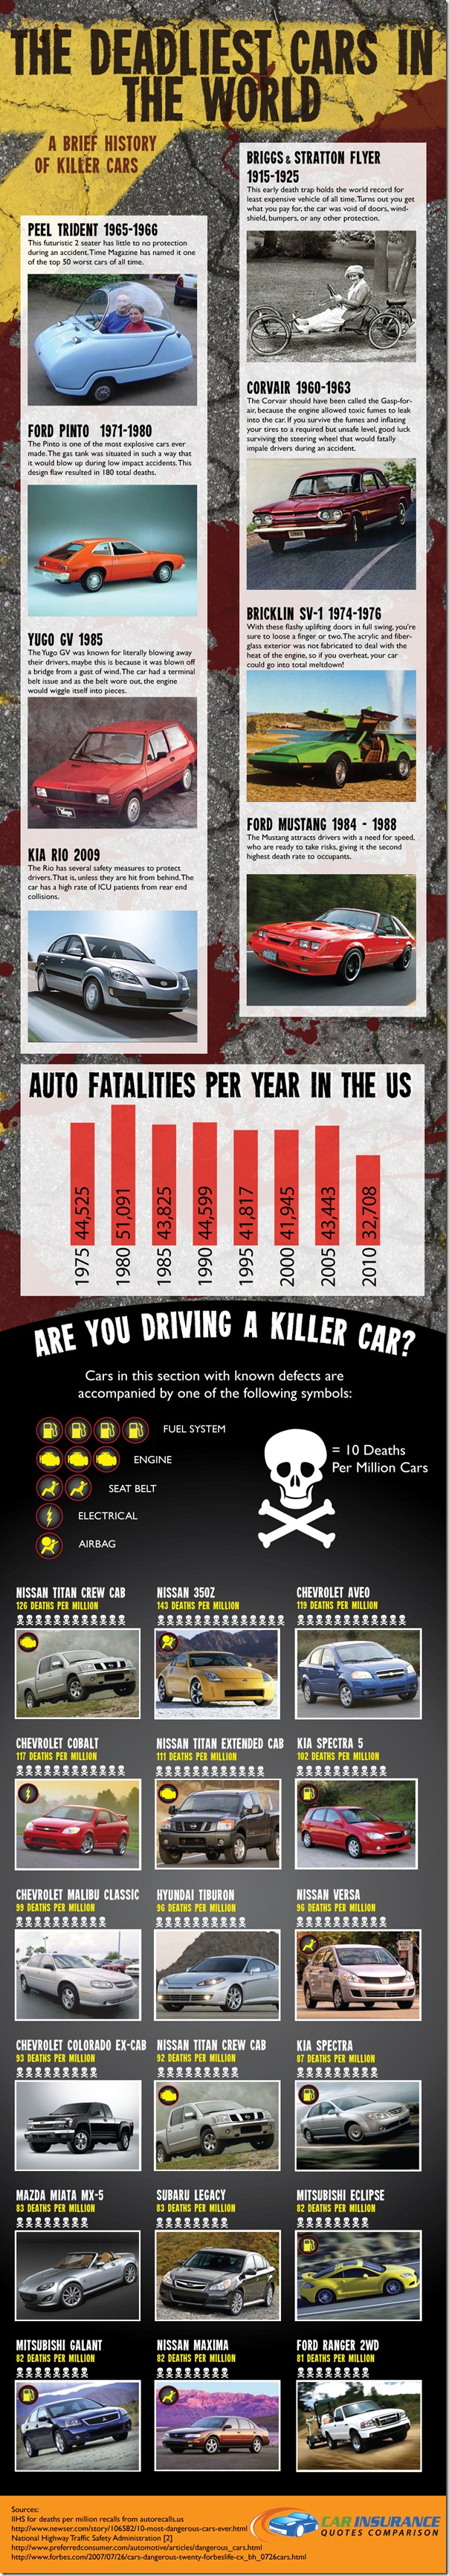 dangerous-cars-infographic